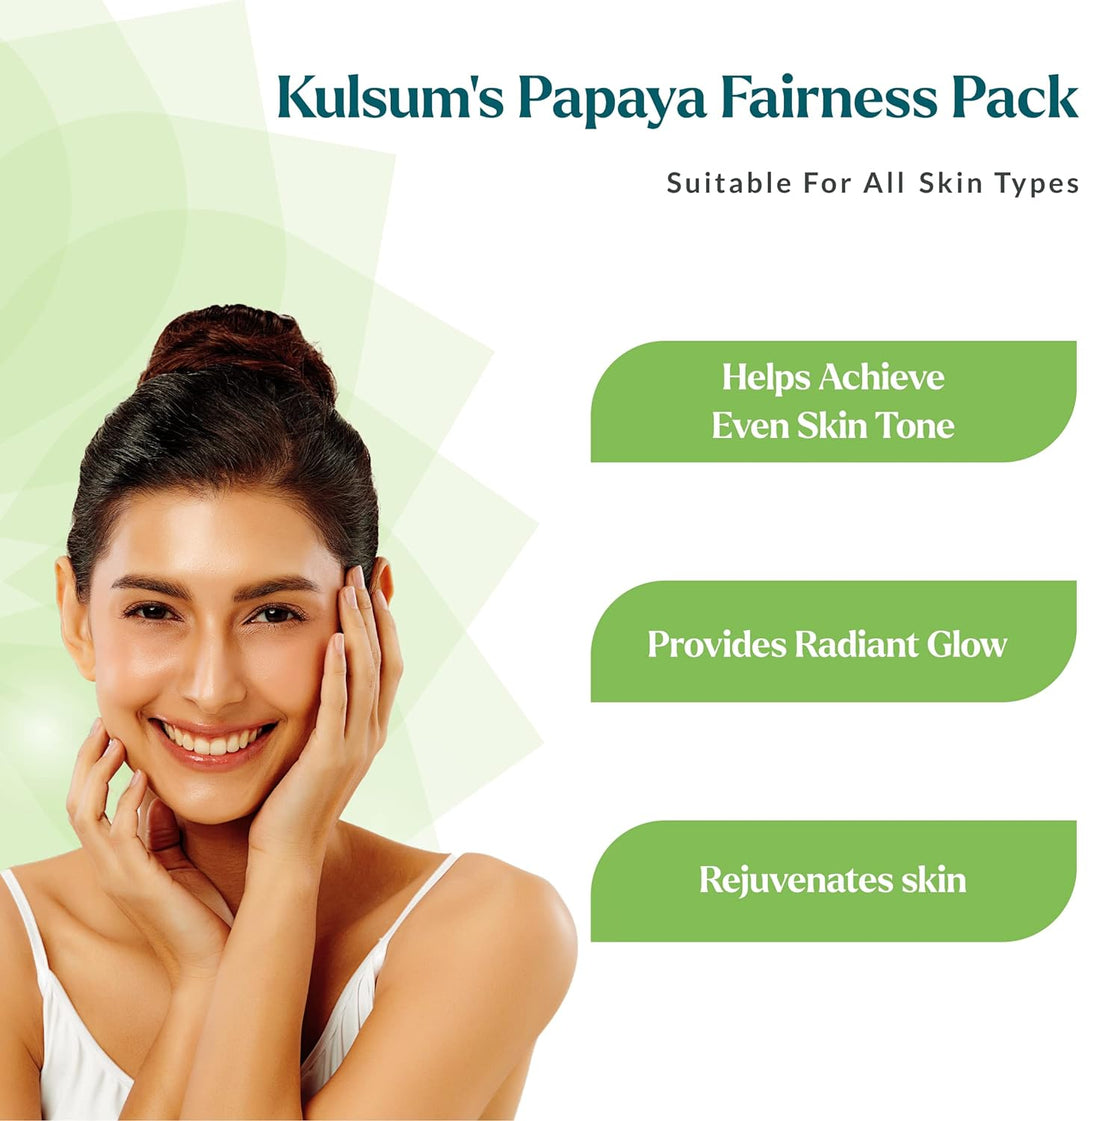 Kulsum's kayakalp Rose Skin Toner (500ML)